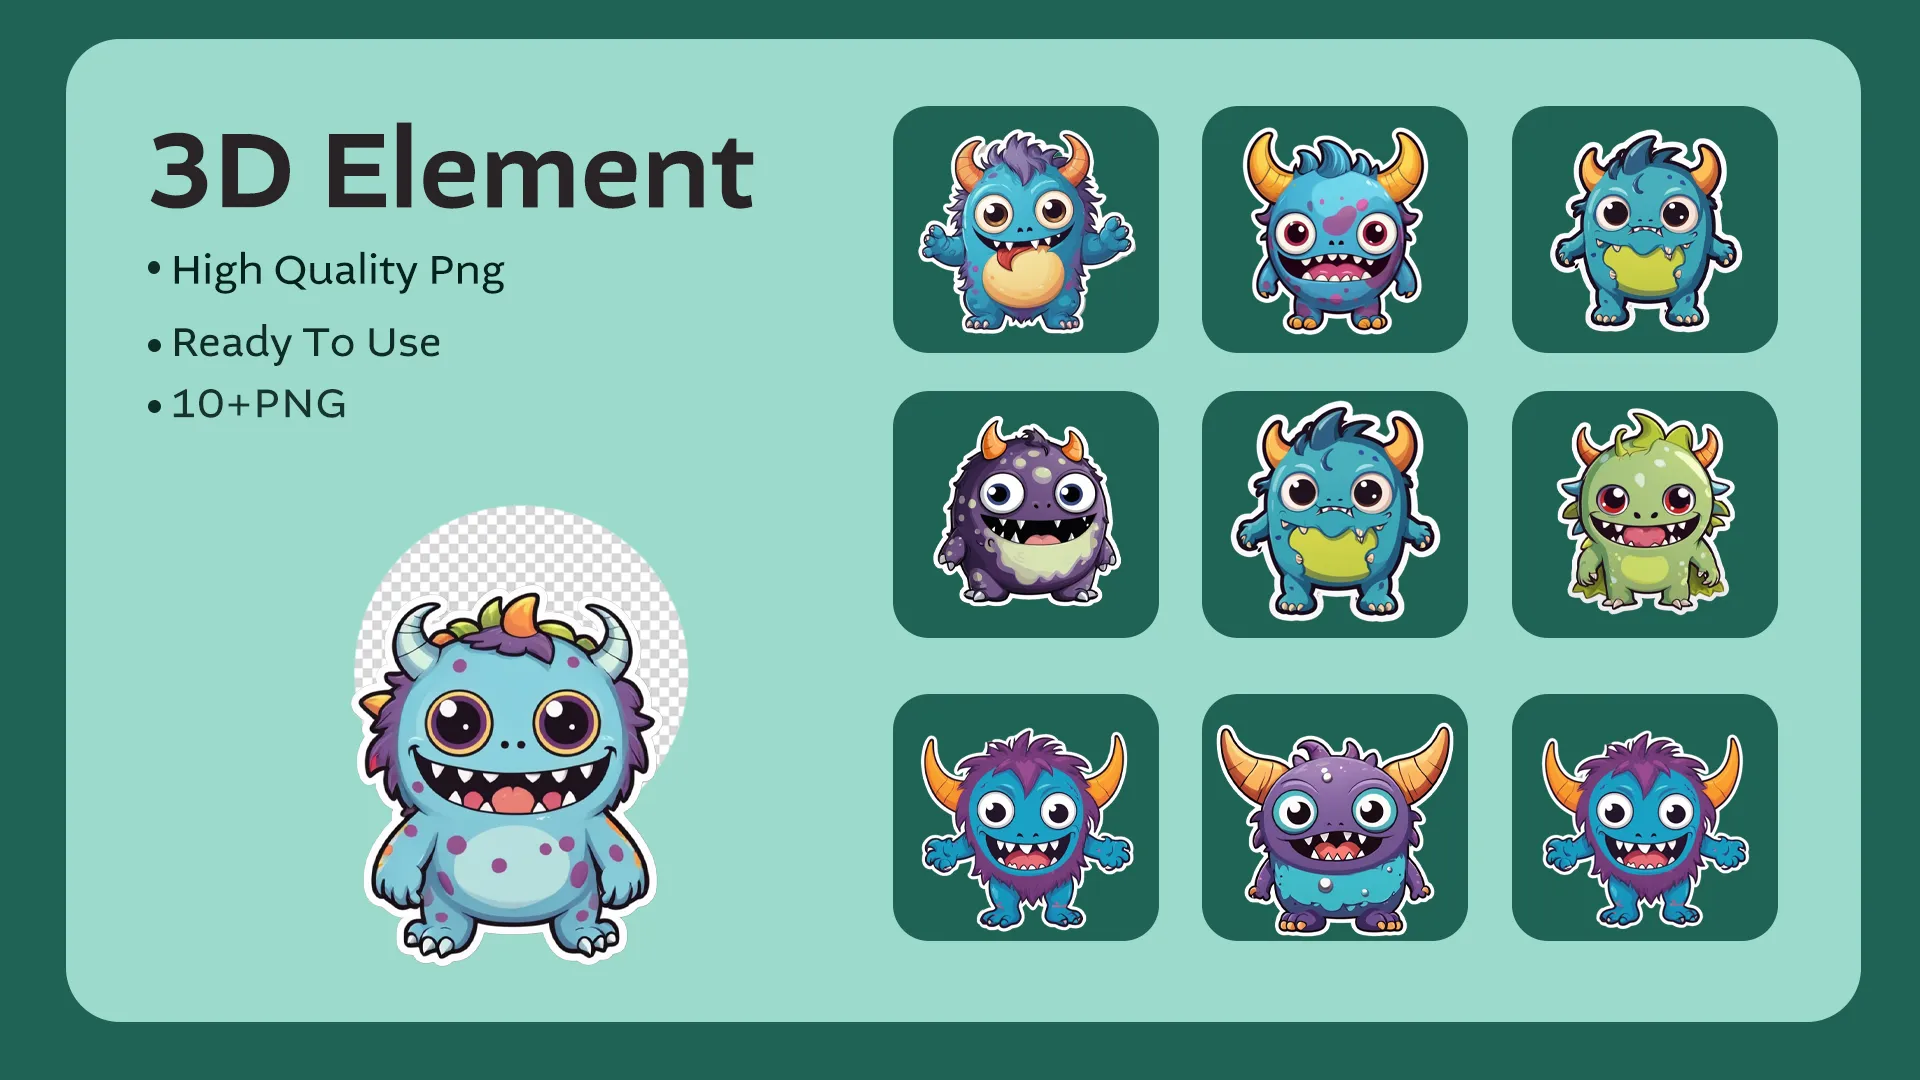 Cute Monster 3D Elements Design